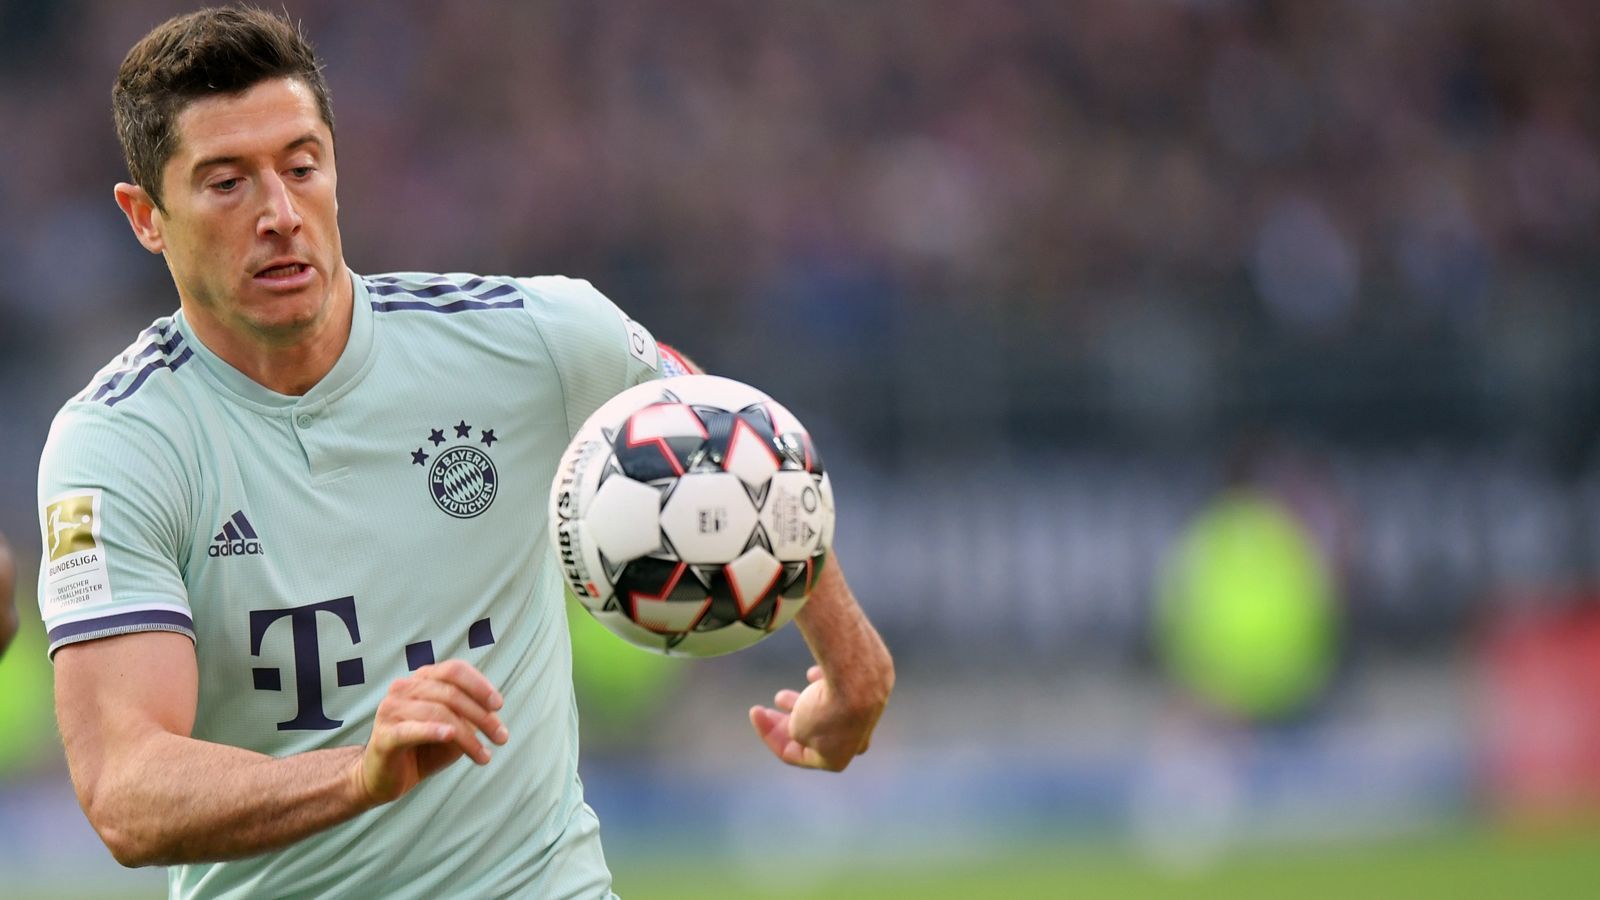 
                <strong>Platz 2 - Robert Lewandowski (FC Bayern München)</strong><br>
                Volley-Tore in der Saison 2018/19: 3Saisontore insgesamt: 22Saisoneinsätze: 33
              